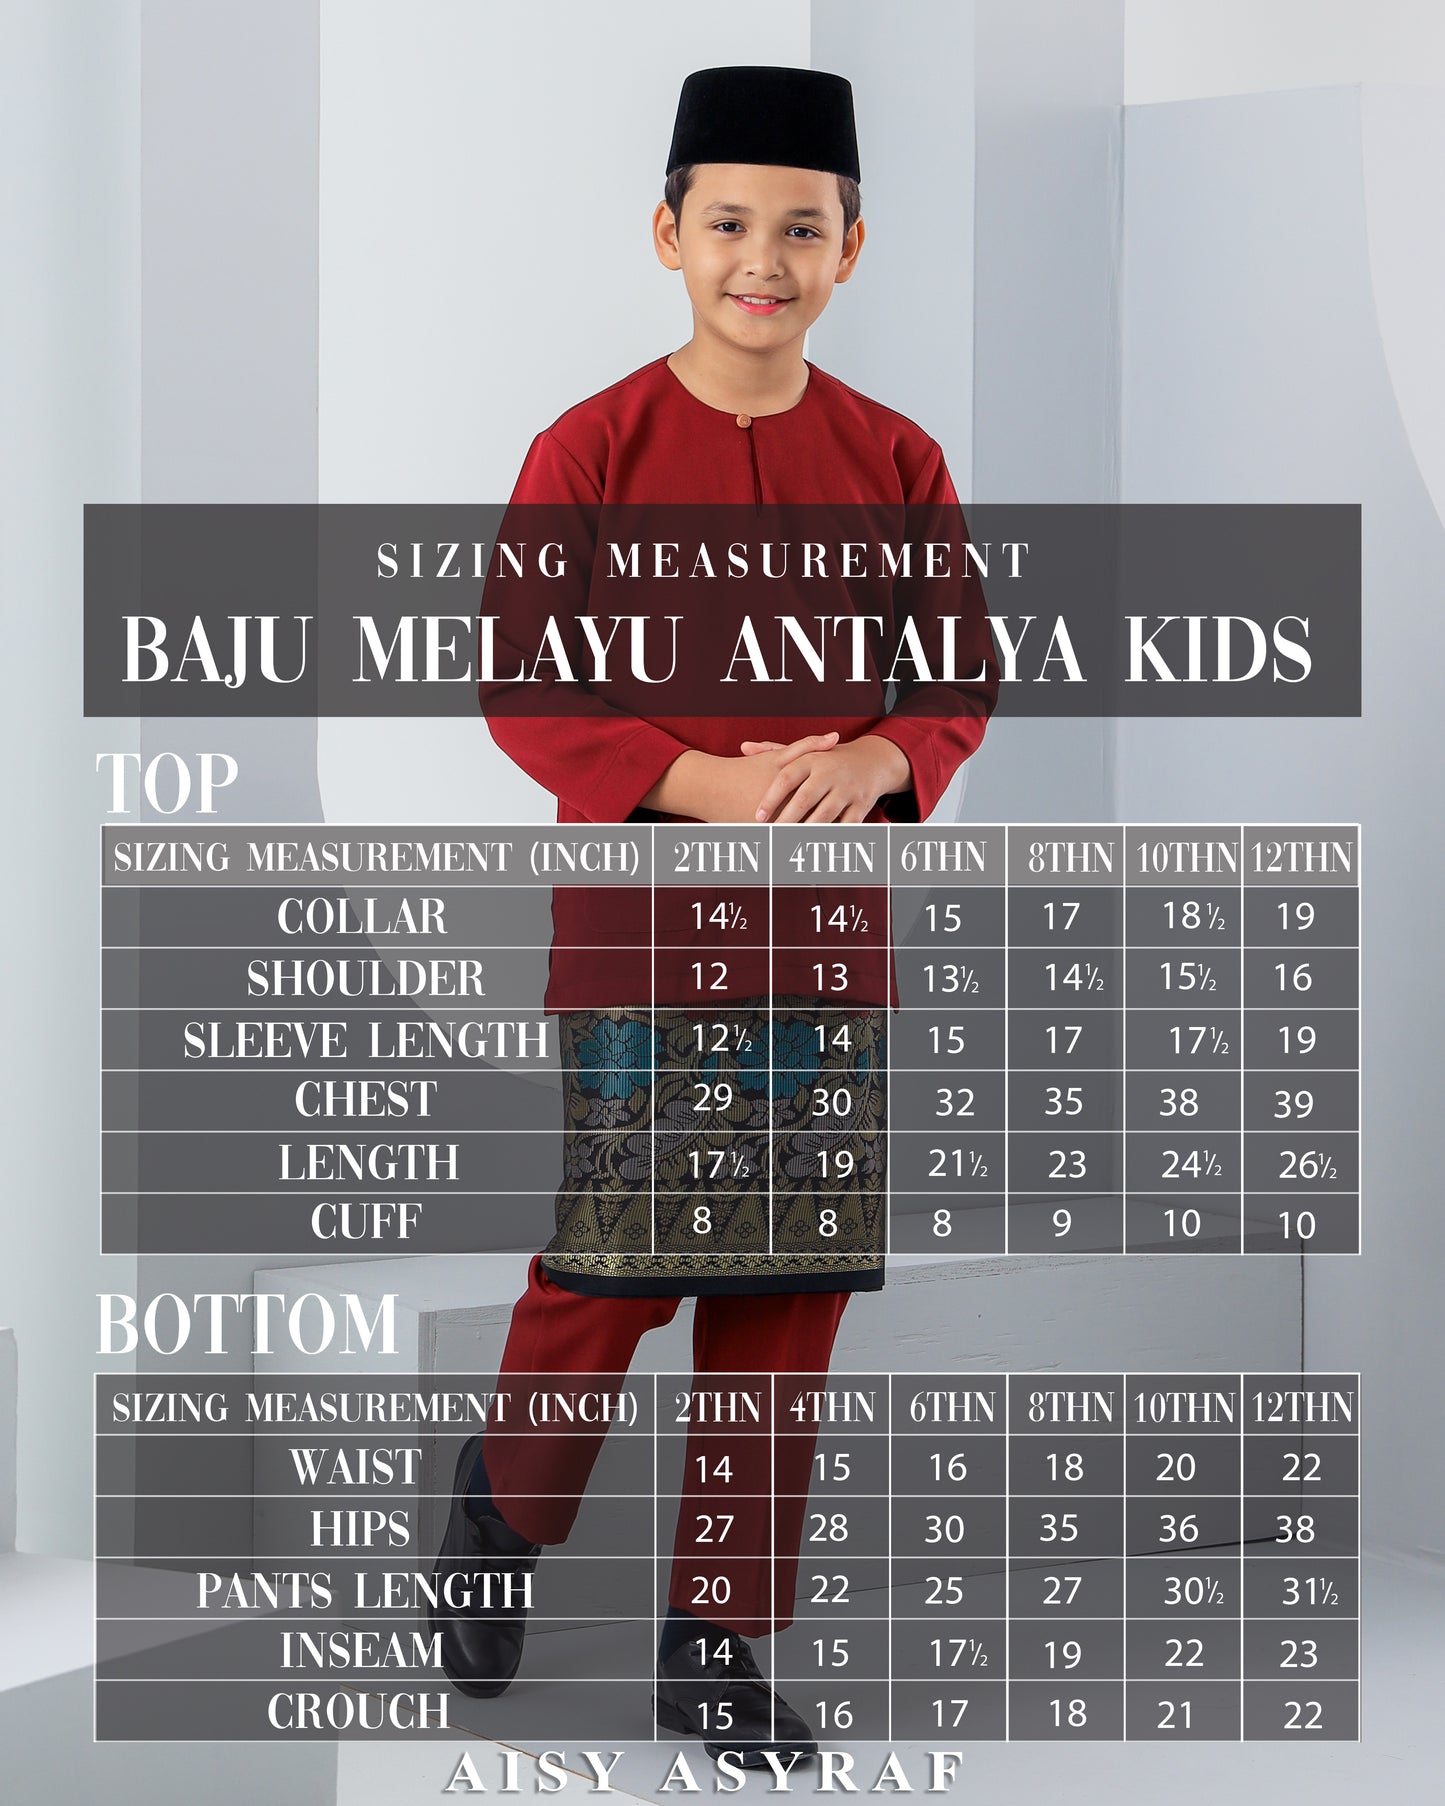 Baju Melayu Antalya Kids - Cinderella Blue